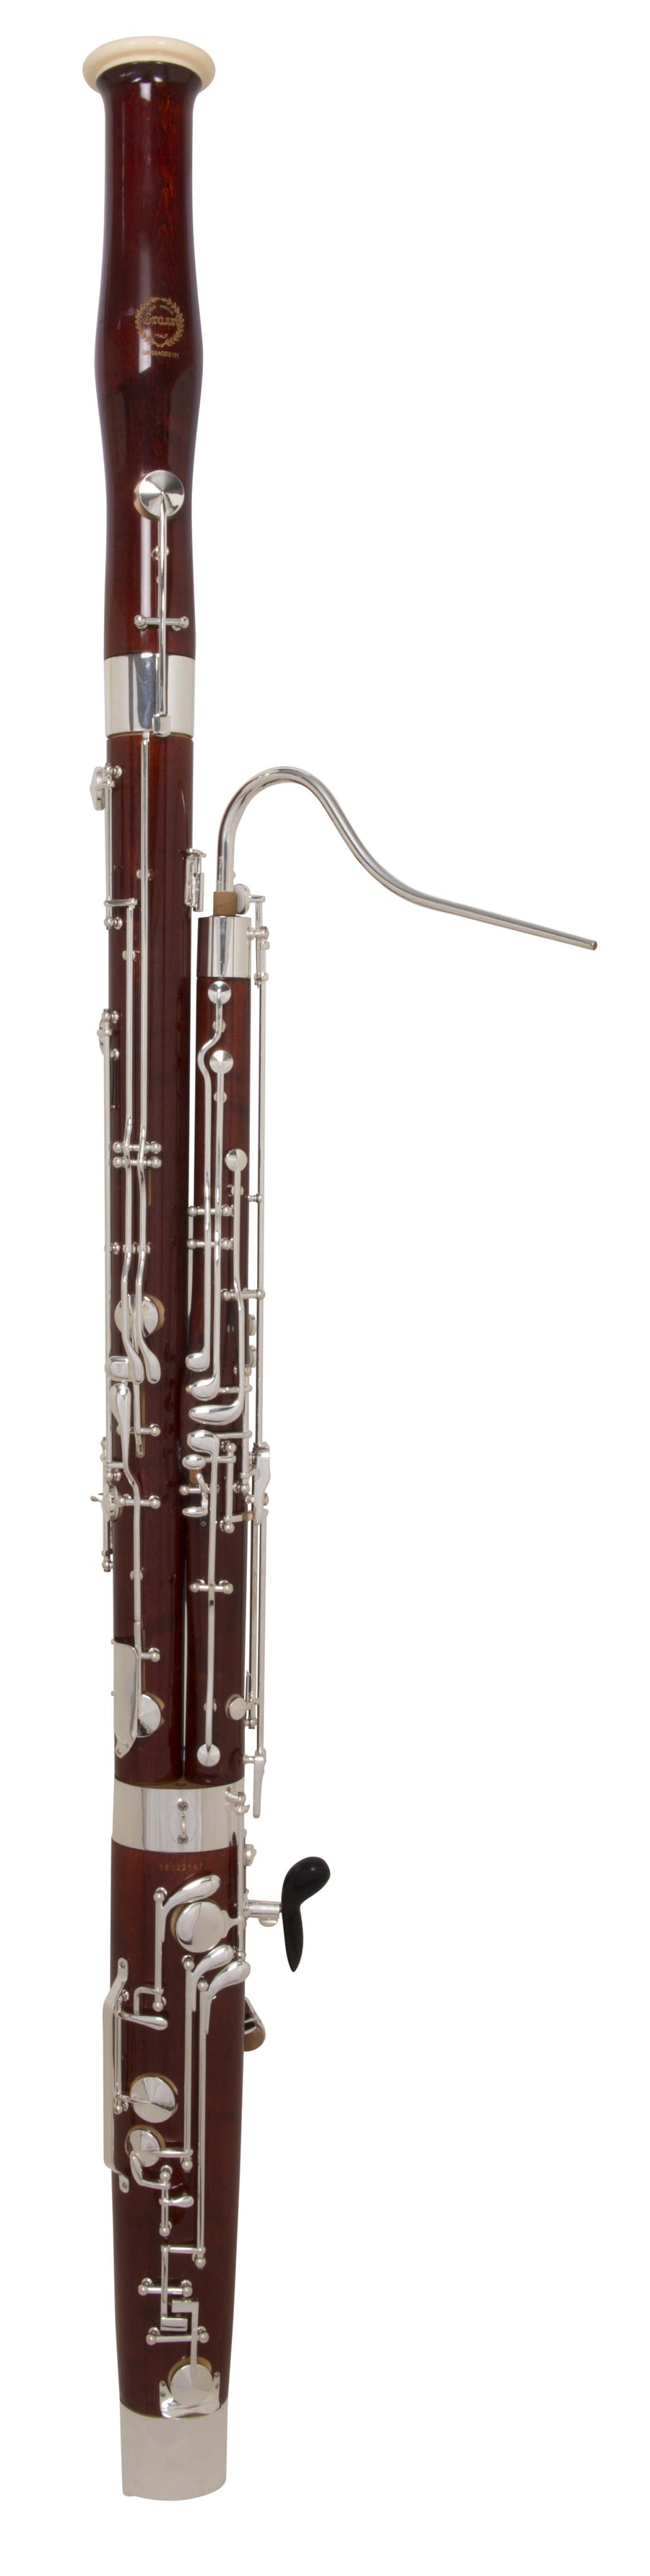 Grassi GR SBASS101 Bassoon in C Wood Body (School Series)